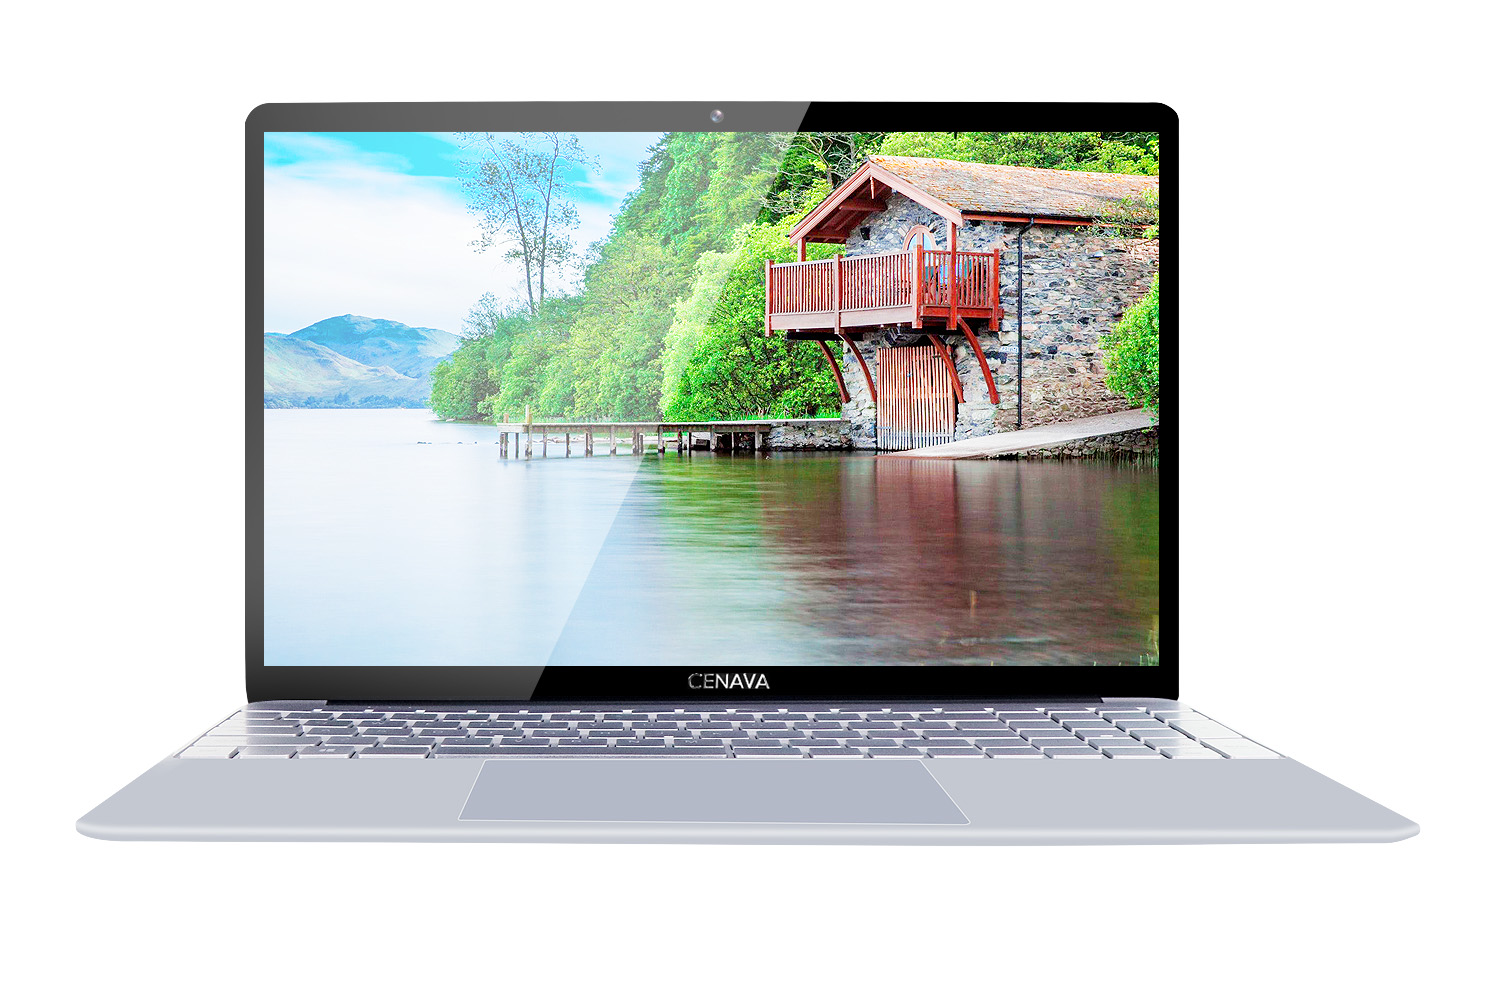 

CENAVA F151 Ноутбук 15,6-дюймовый Intel Core J3355 Intel HD Графика 500 Win10 6G RAM 128GB SSD ноутбук TN Экран